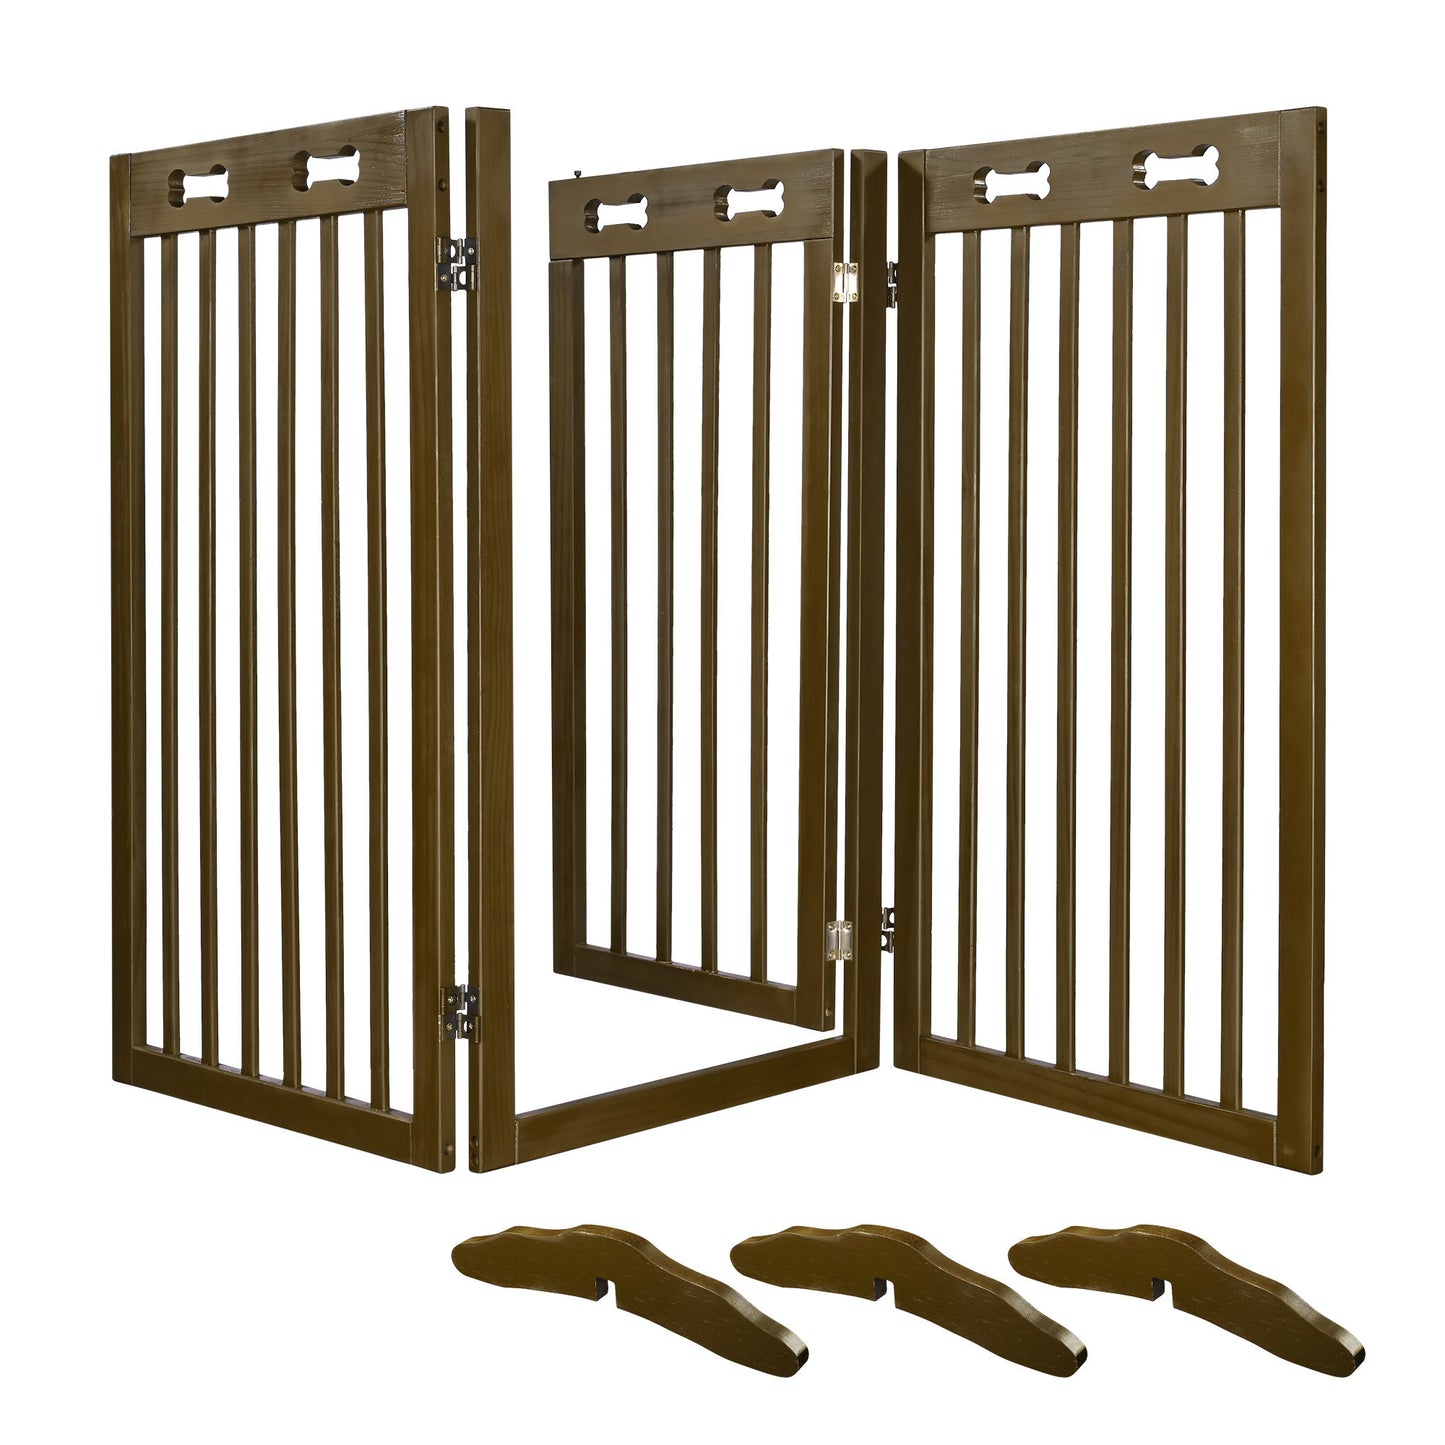 60" x 36" 3-Panel Folding Wooden Gate